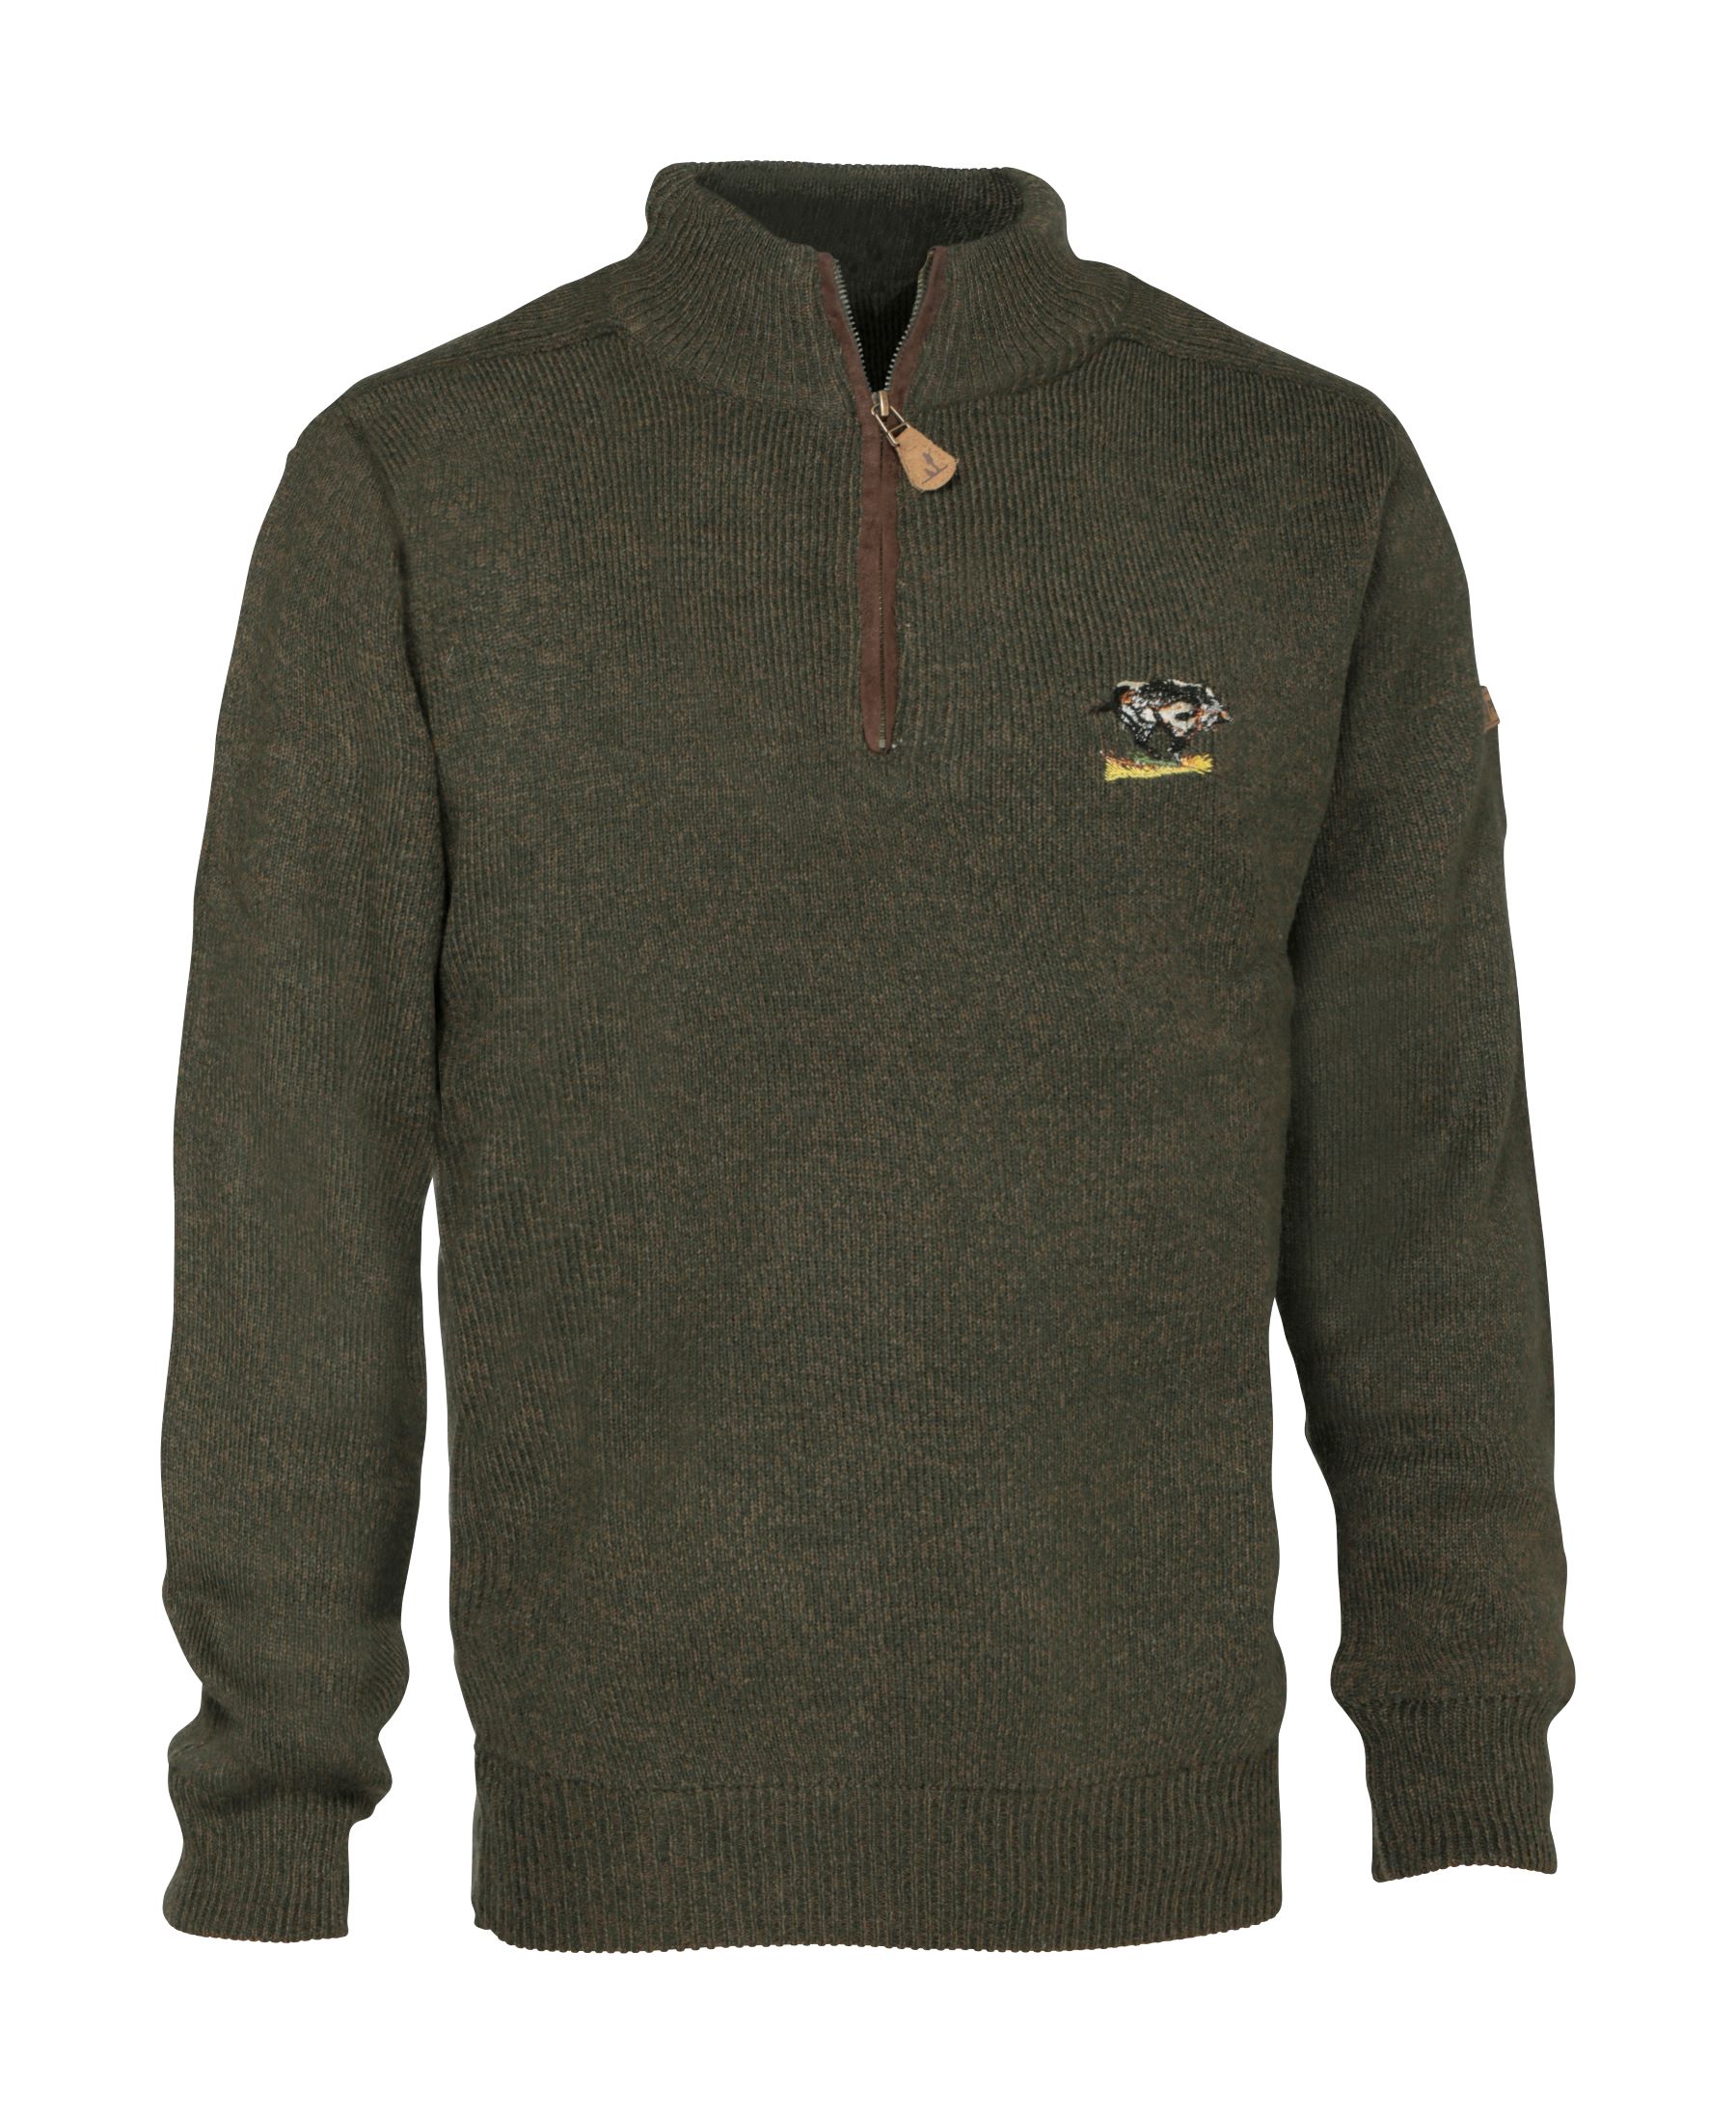 Percussion Zipped Sweatshirt With Boar - Olive - Edinburgh Outdoor Wear